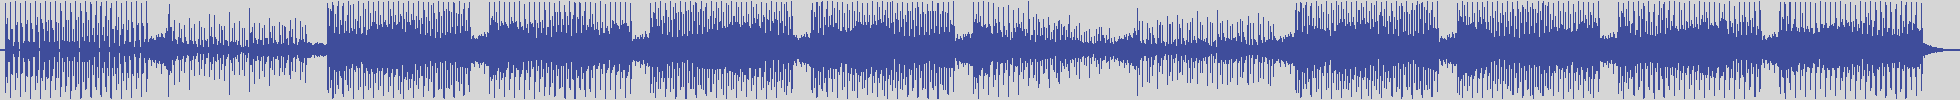 nf_boyz_records [NFY066] Mangusta - Three Point Hat [Room 33 Mix] audio wave form